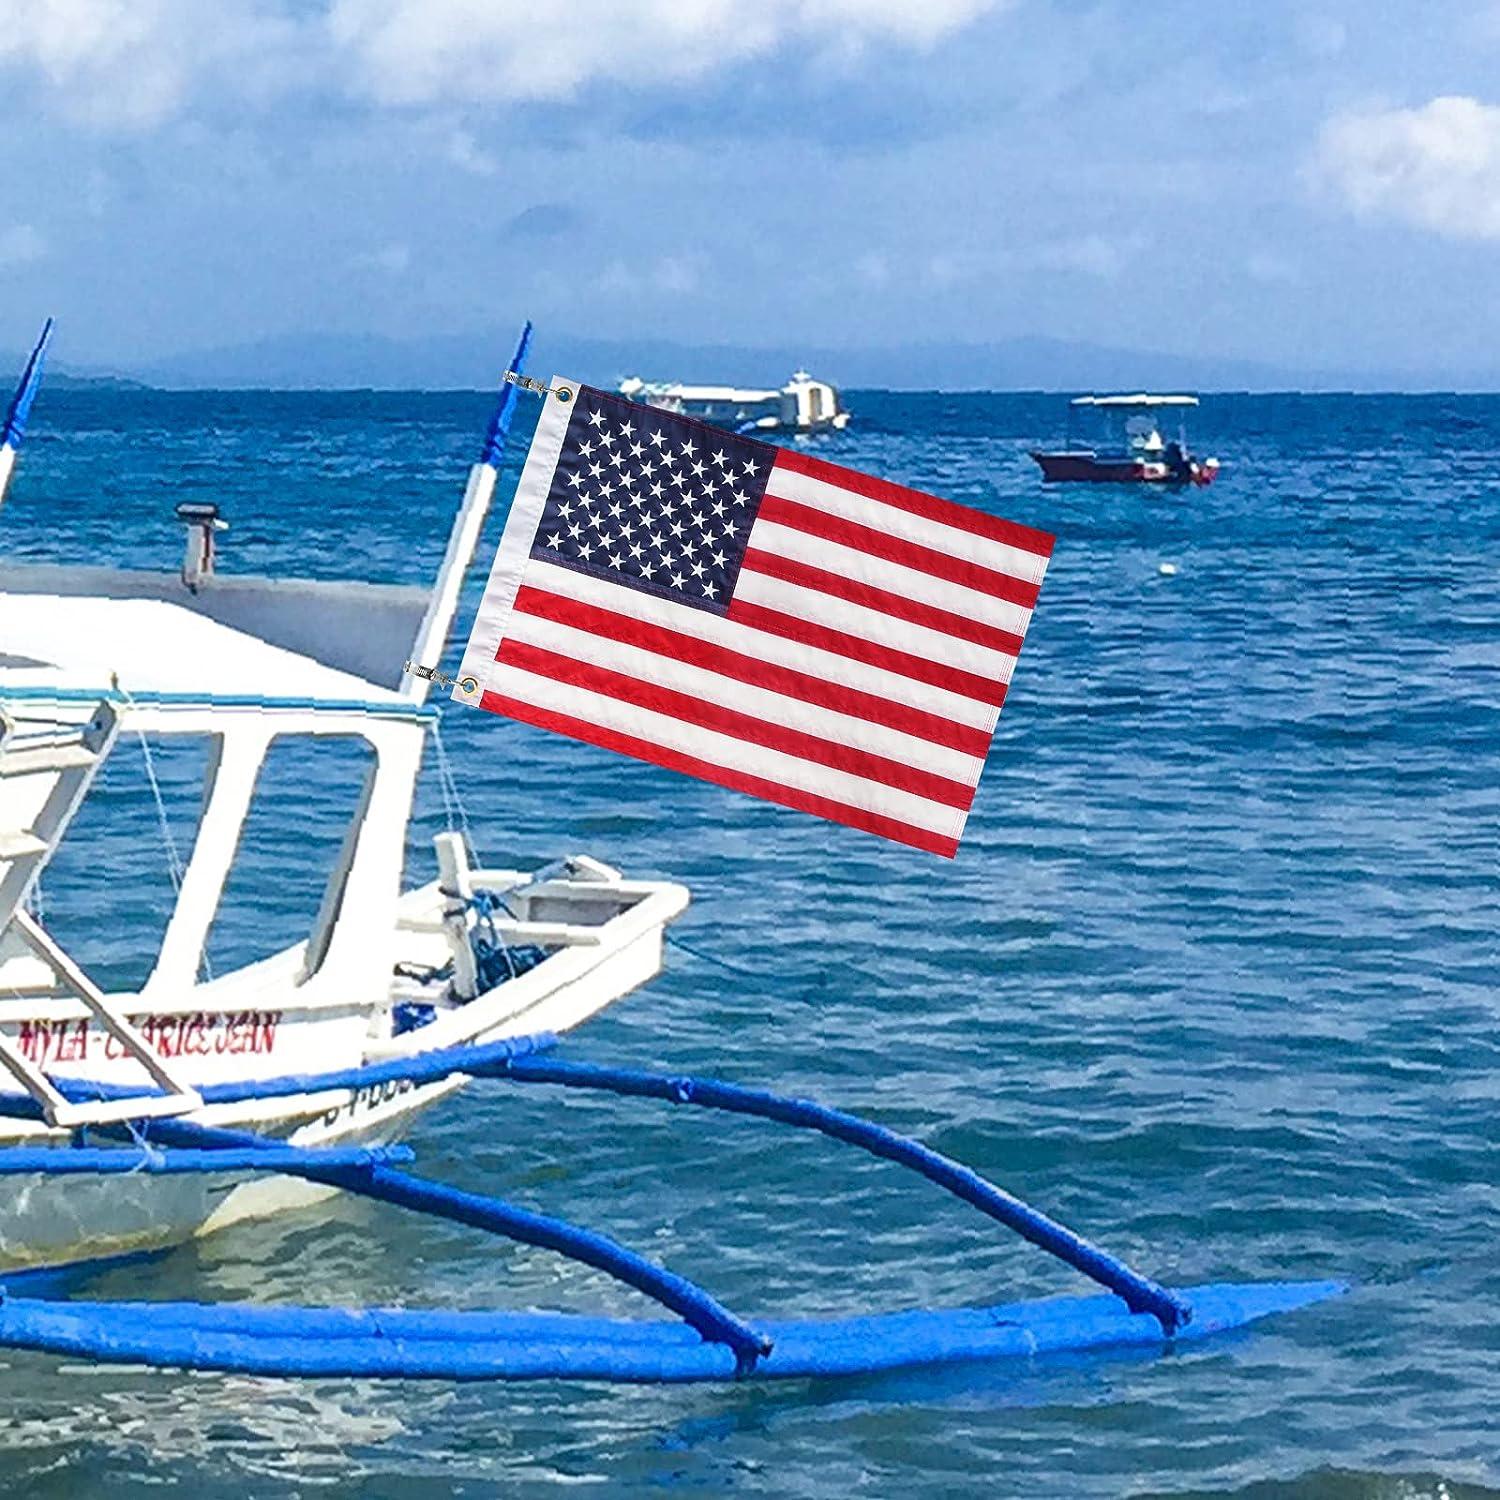 Yafeco U.S. 50 Star Sewn Boat Flag with 4 Boat Flag Pole Kits16 x